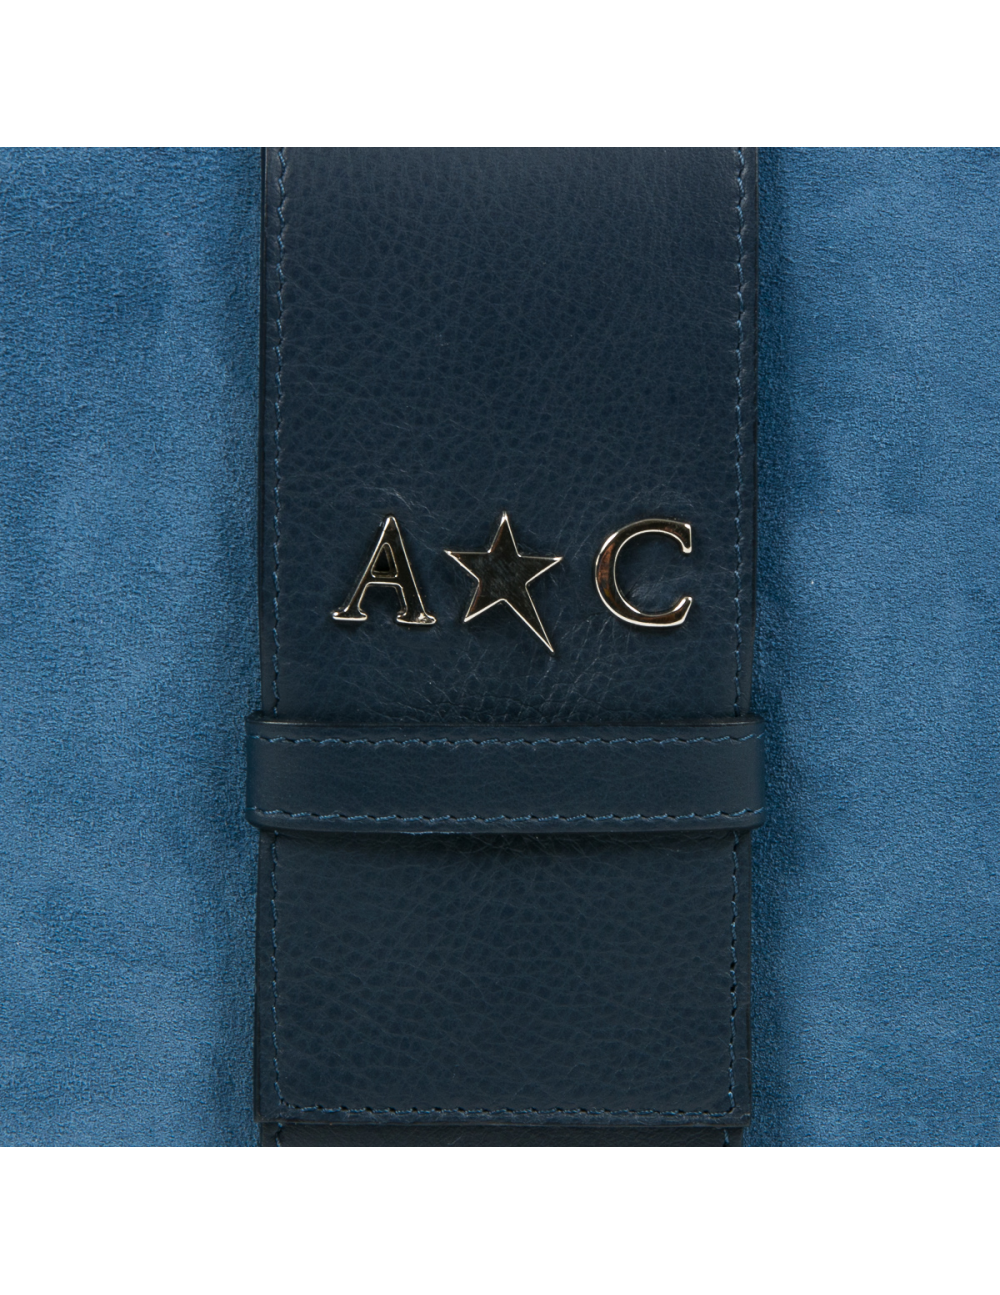 Andrew Charles Womens Handbag Blue CORY - YuppyCollections